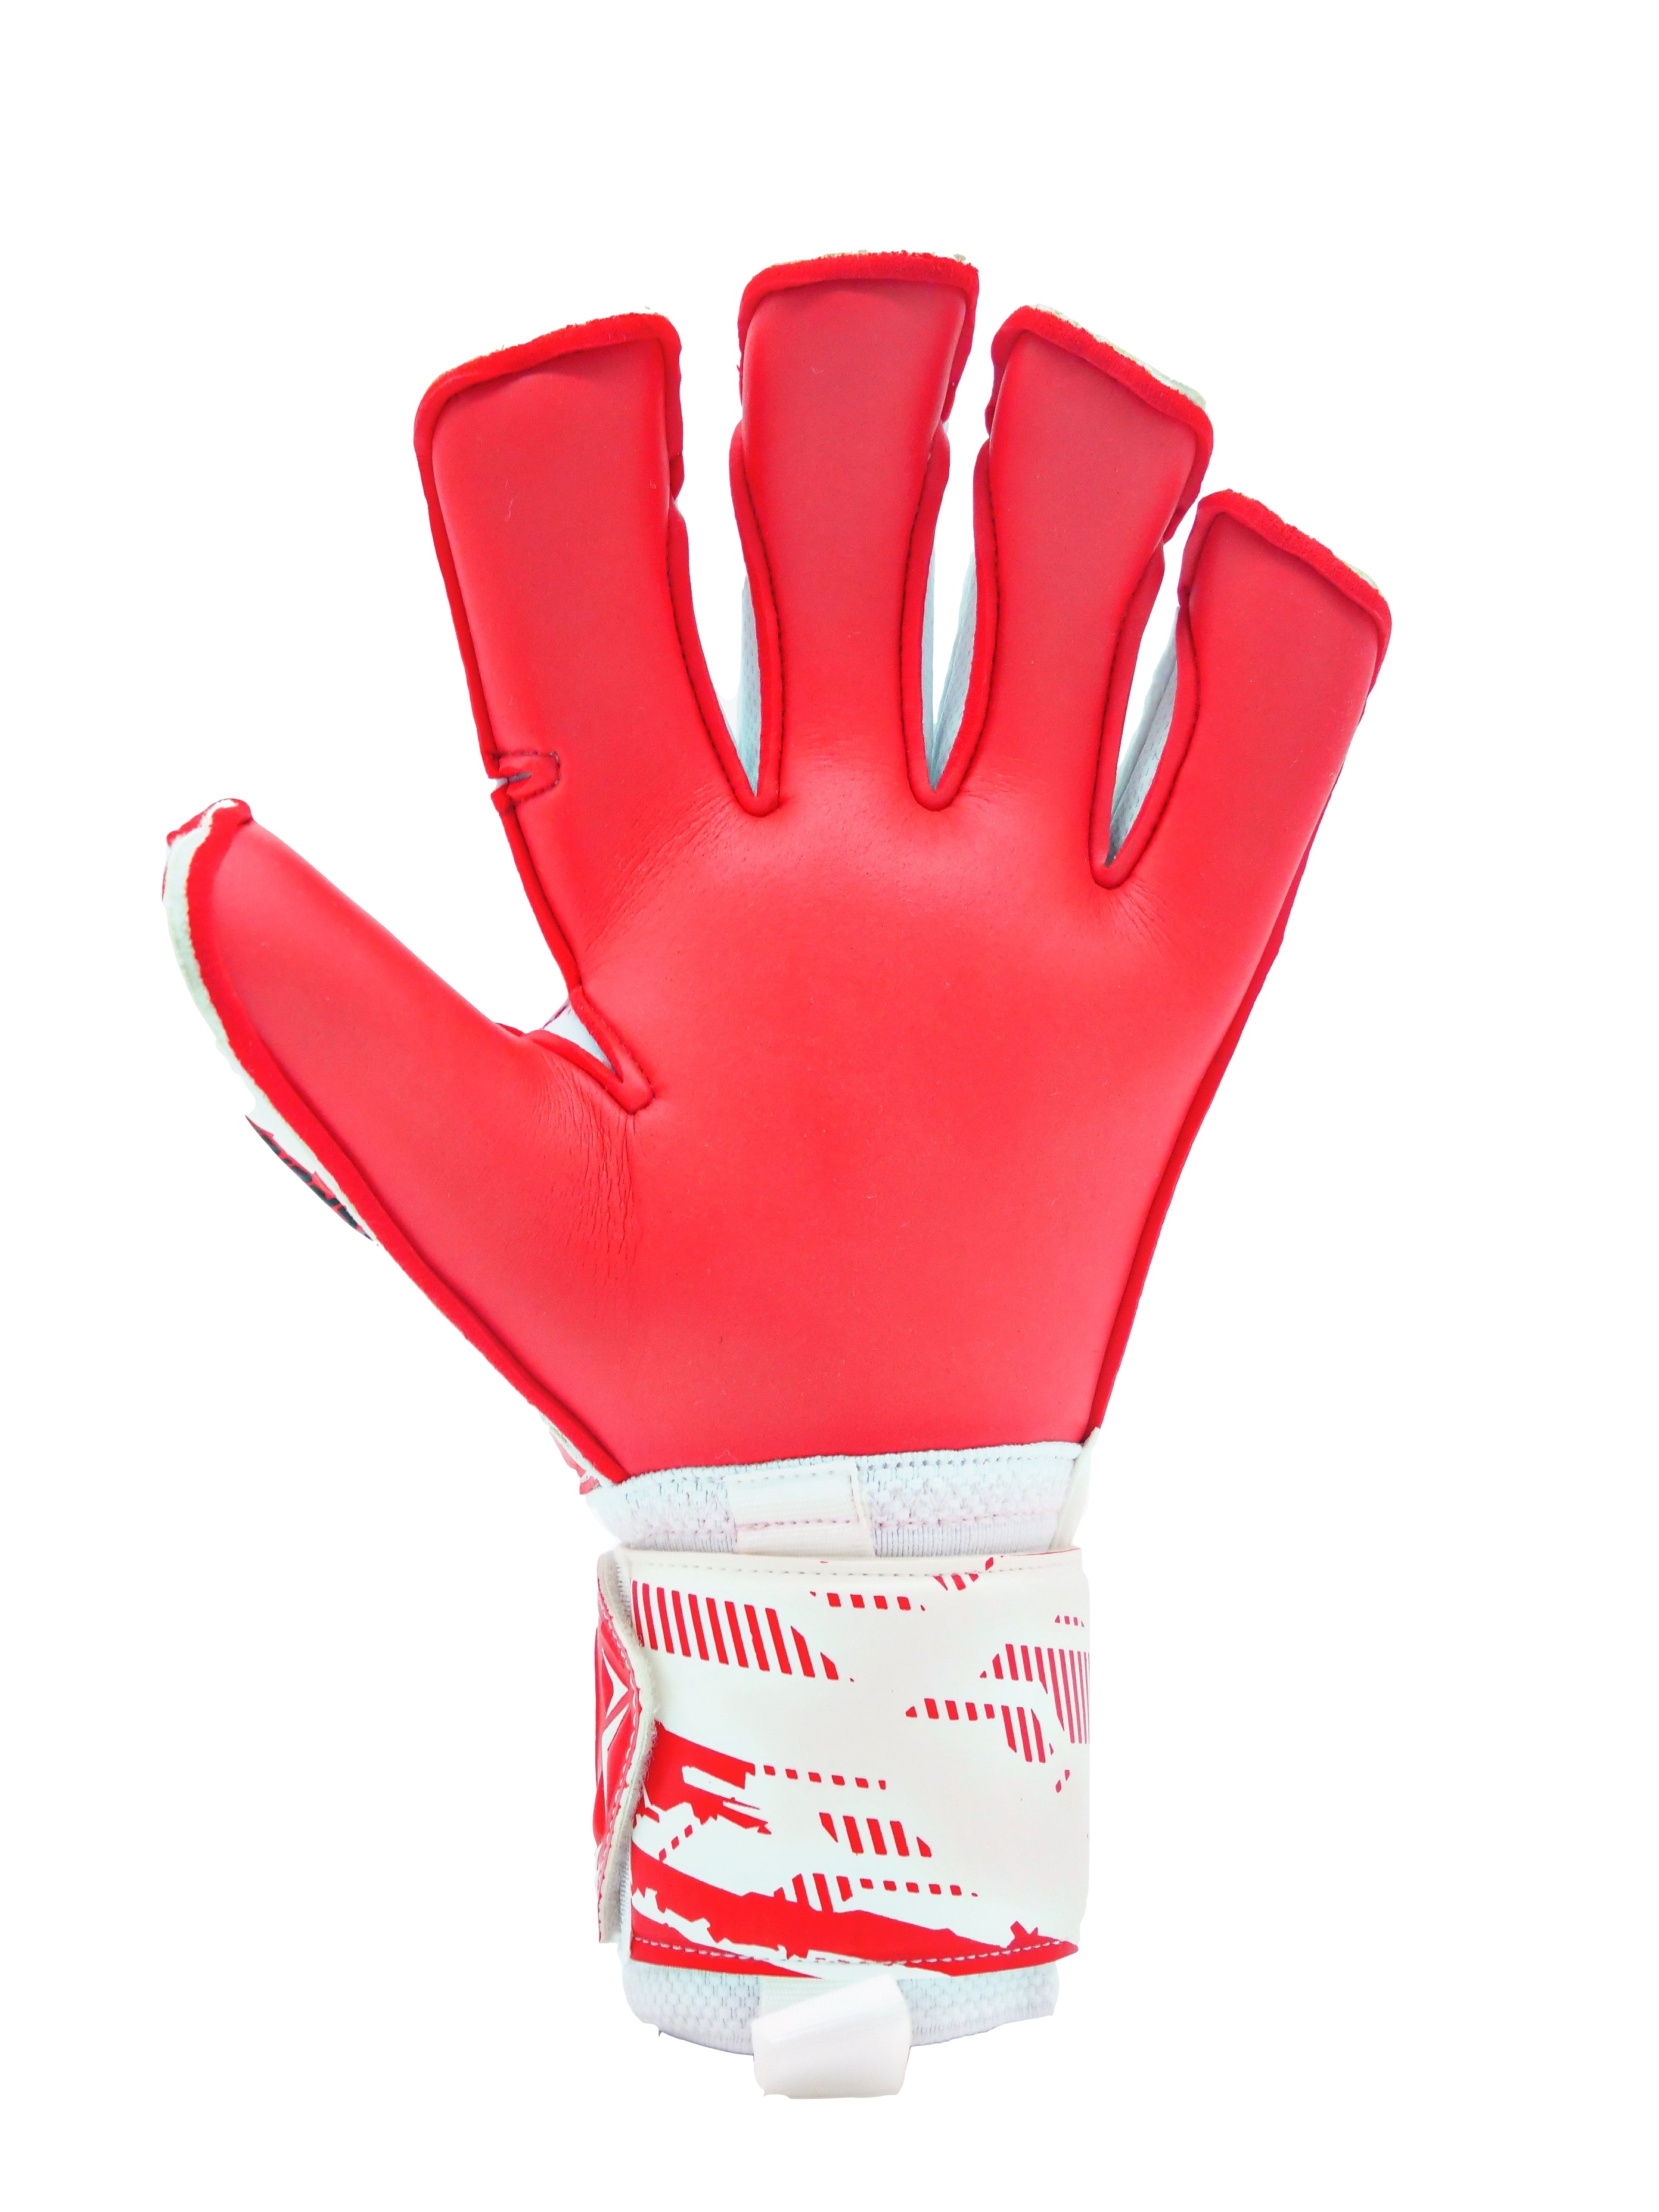 RG Bacan Replica Gloves